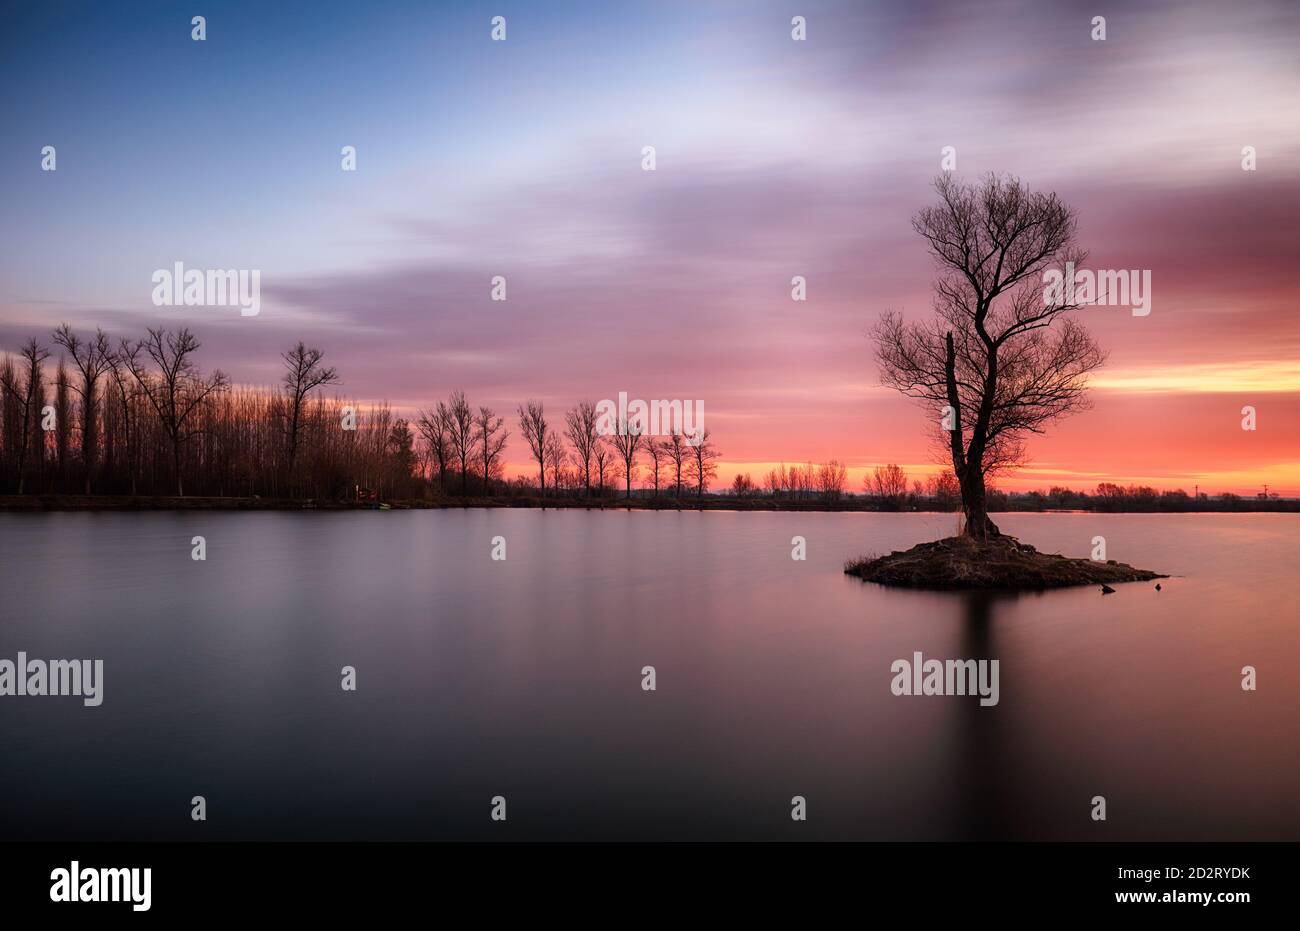 Lake with alone tree at dramatic sunset Stock Photo